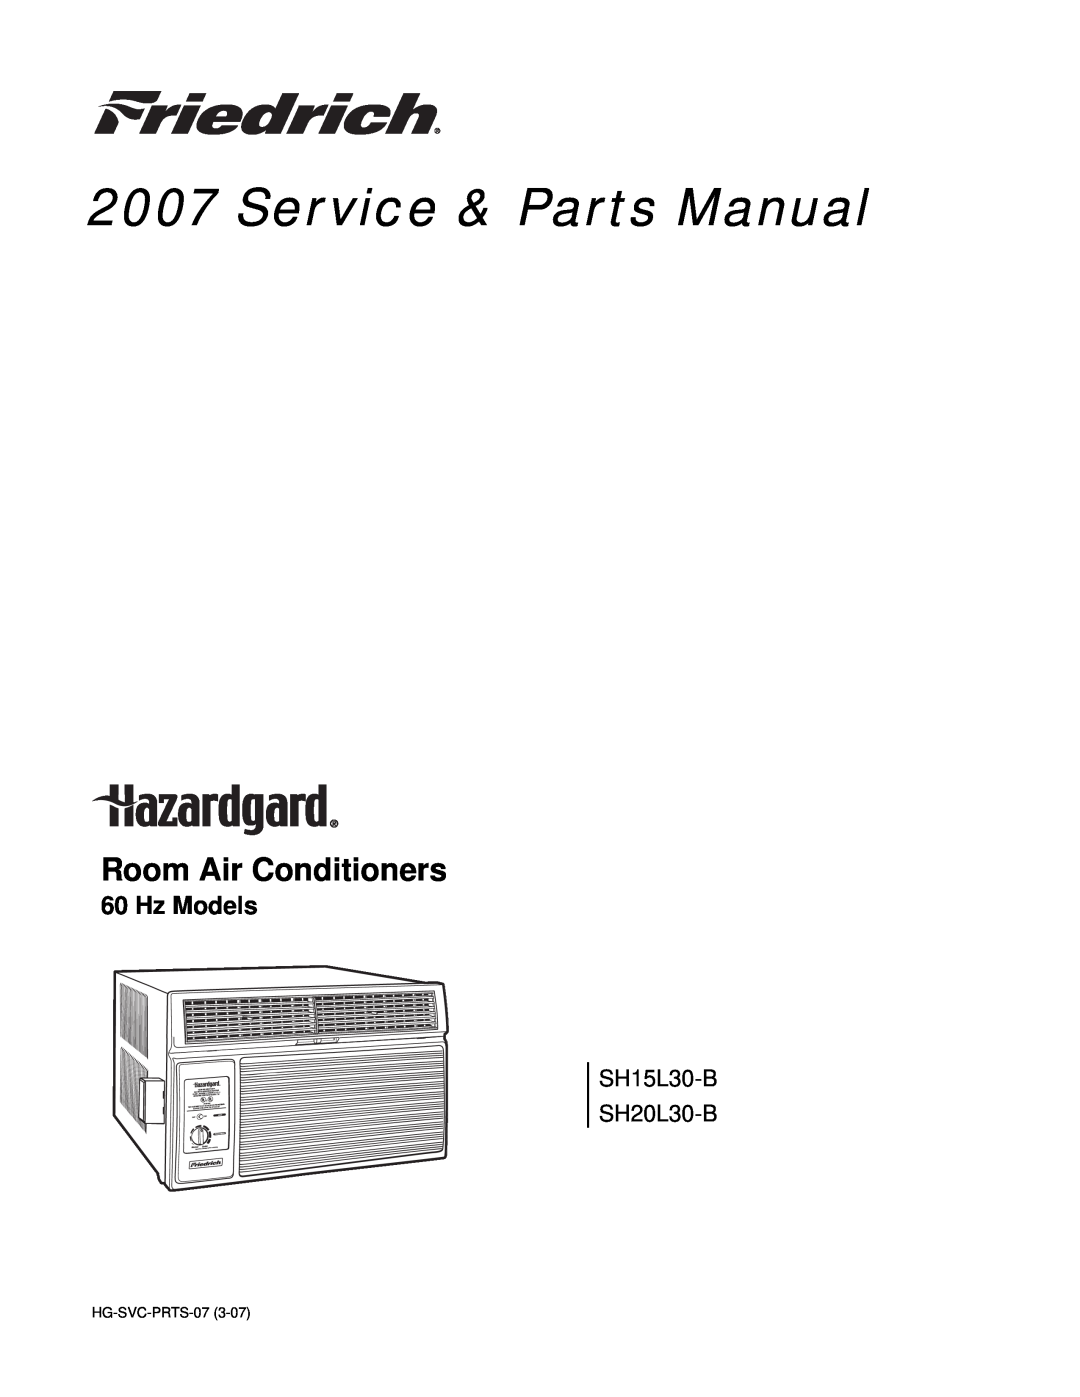 Friedrich manual Room Air Conditioners, Service & Parts Manual, Hz Models, SH15L30-B SH20L30-B 